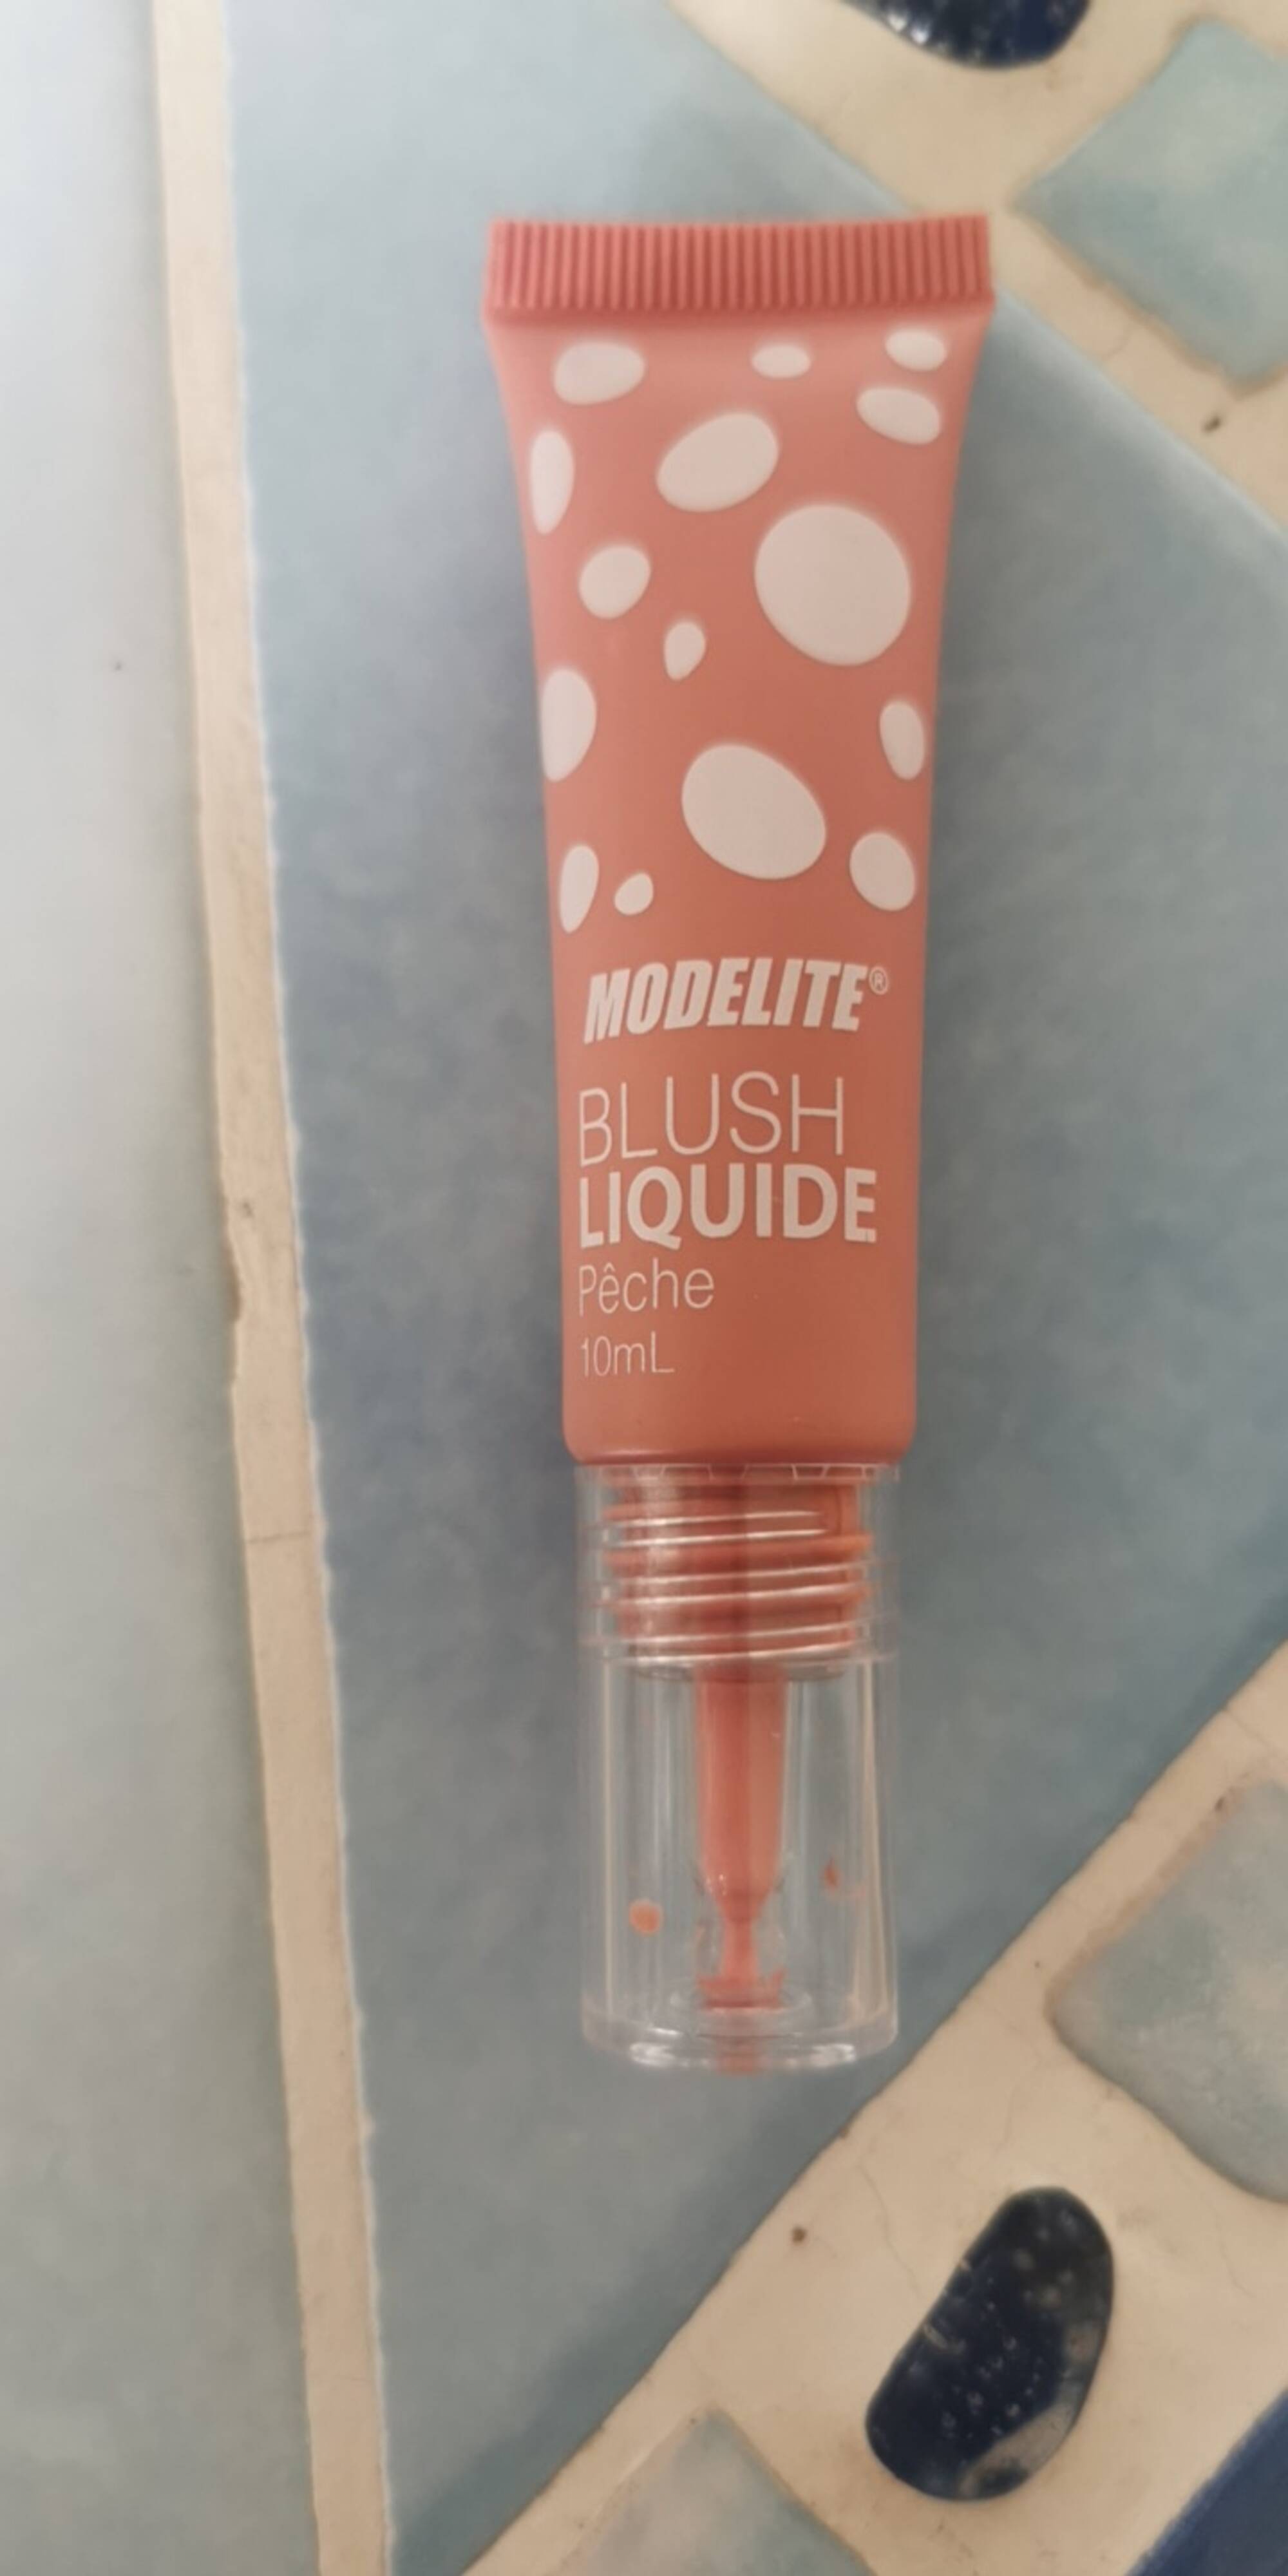 MODÉLITE - Blush liquide pêche